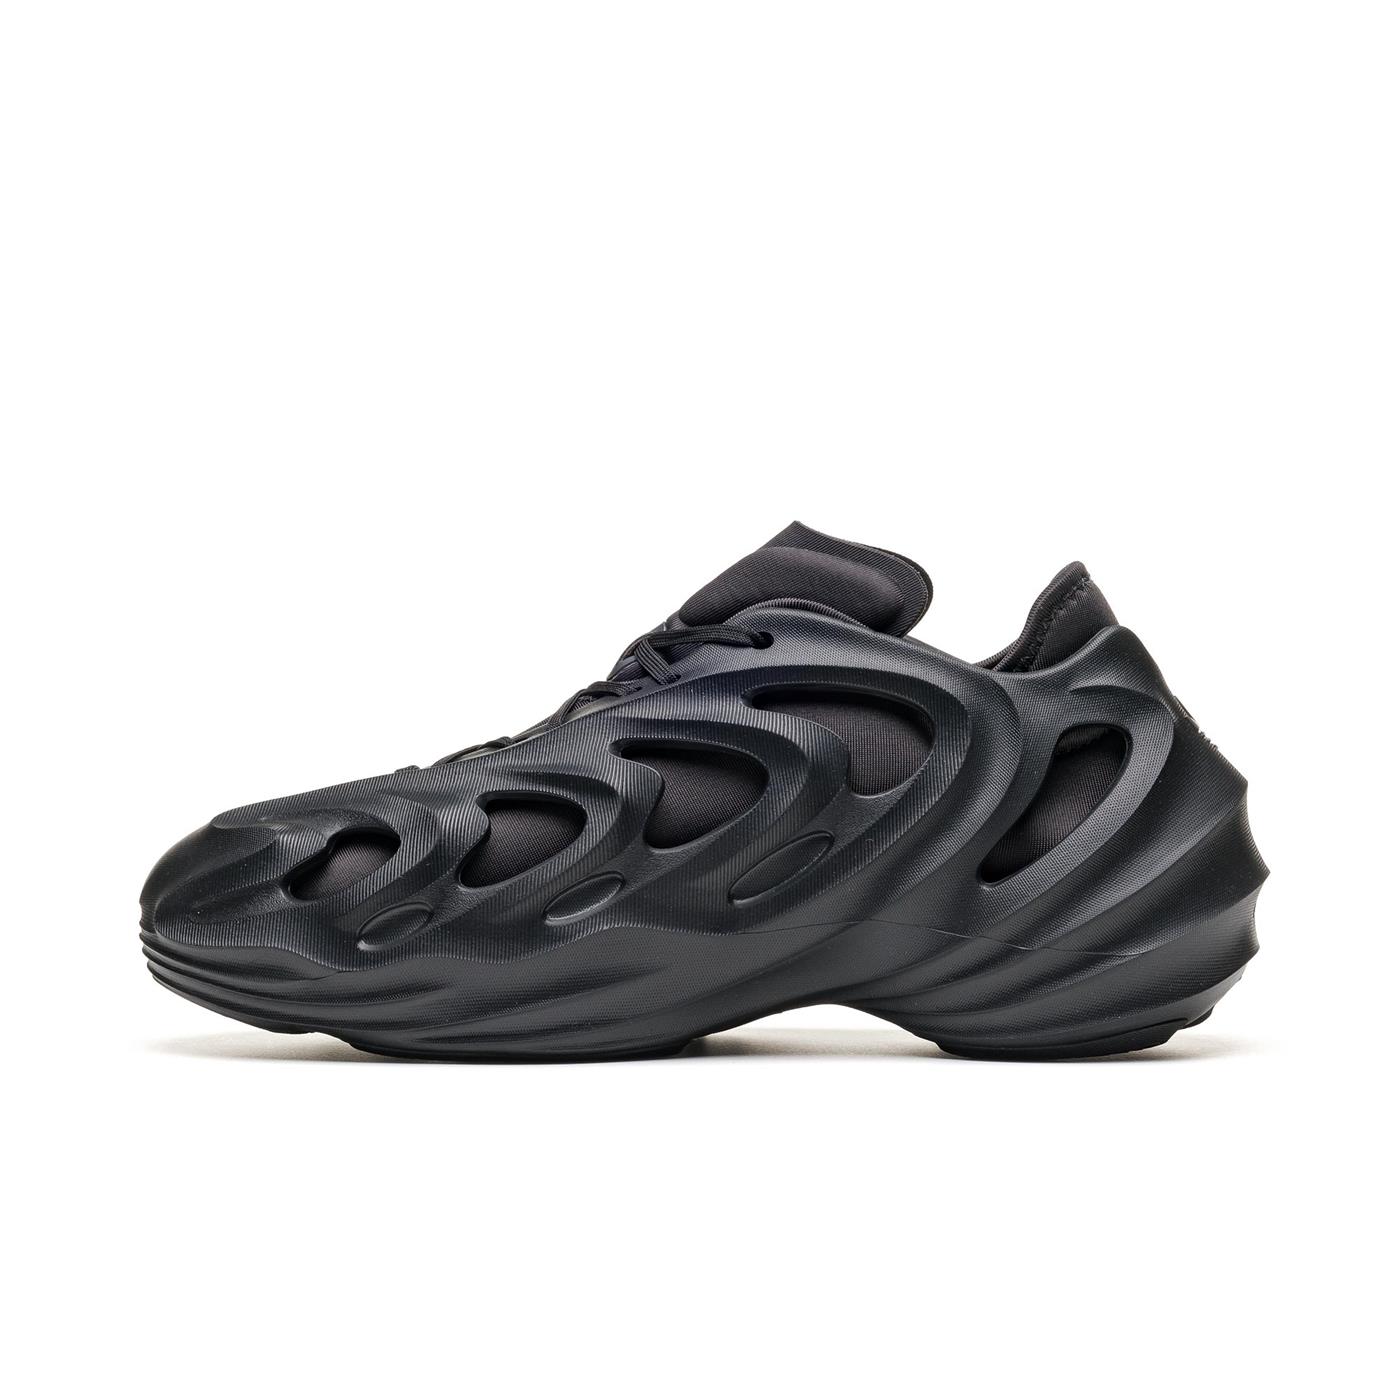 Sneakers adidas Originals adiFOM Q Black for Man | IE7449 | XTREME.PT